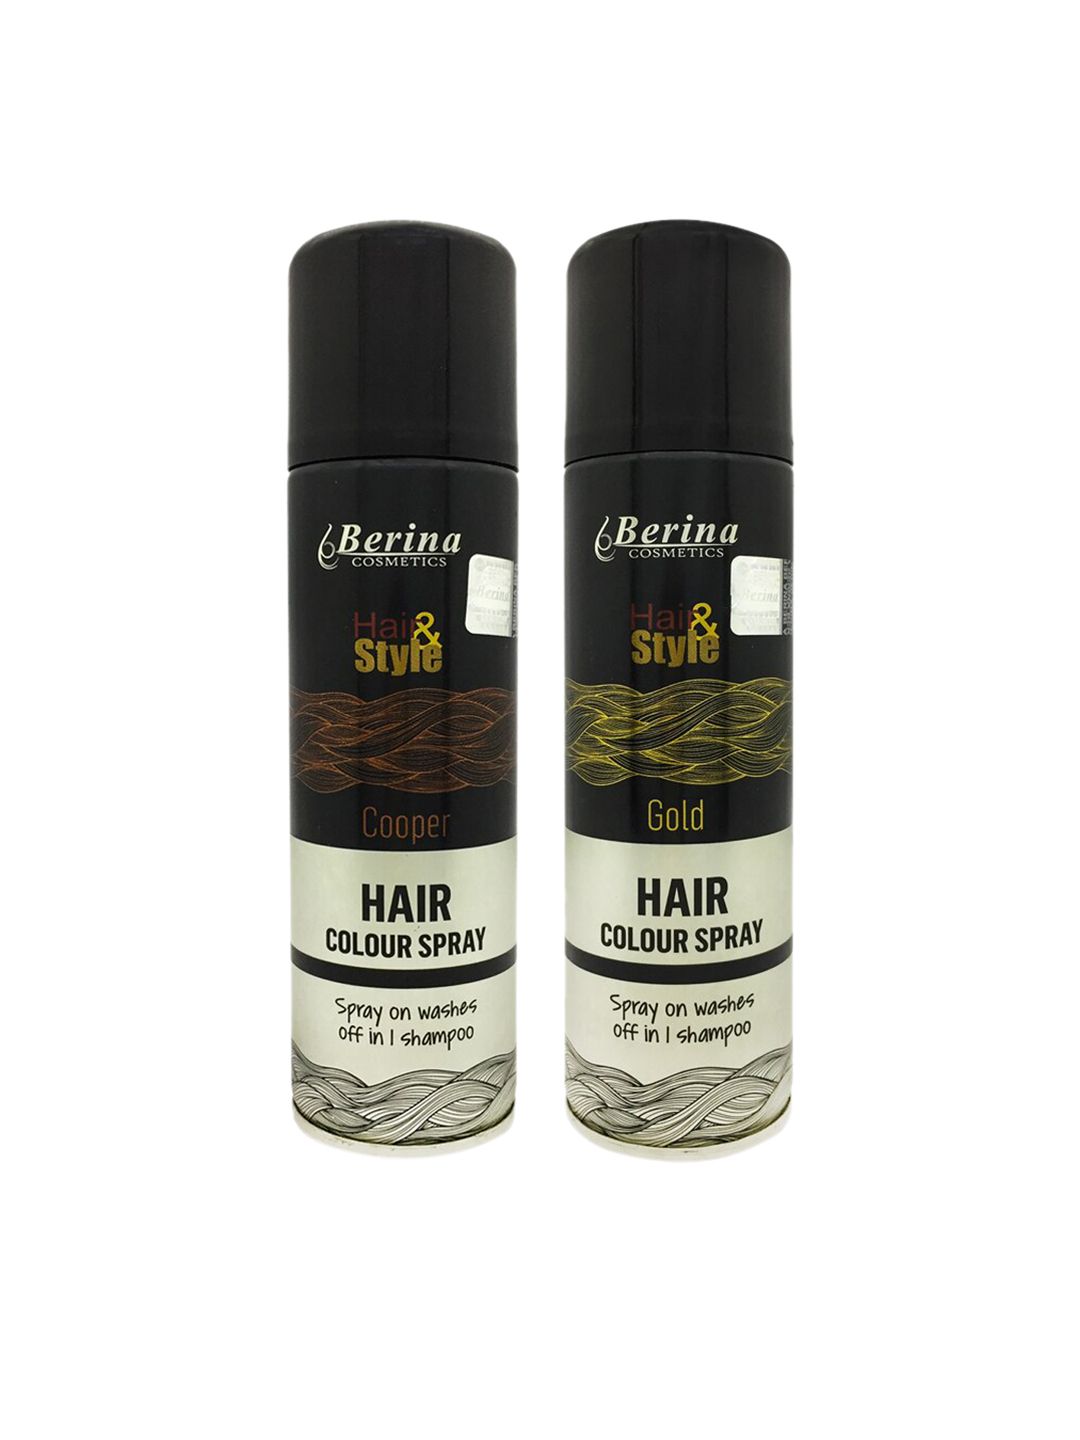 Berina Pack of 2 Hair Color Spray - Copper & Gold Price in India